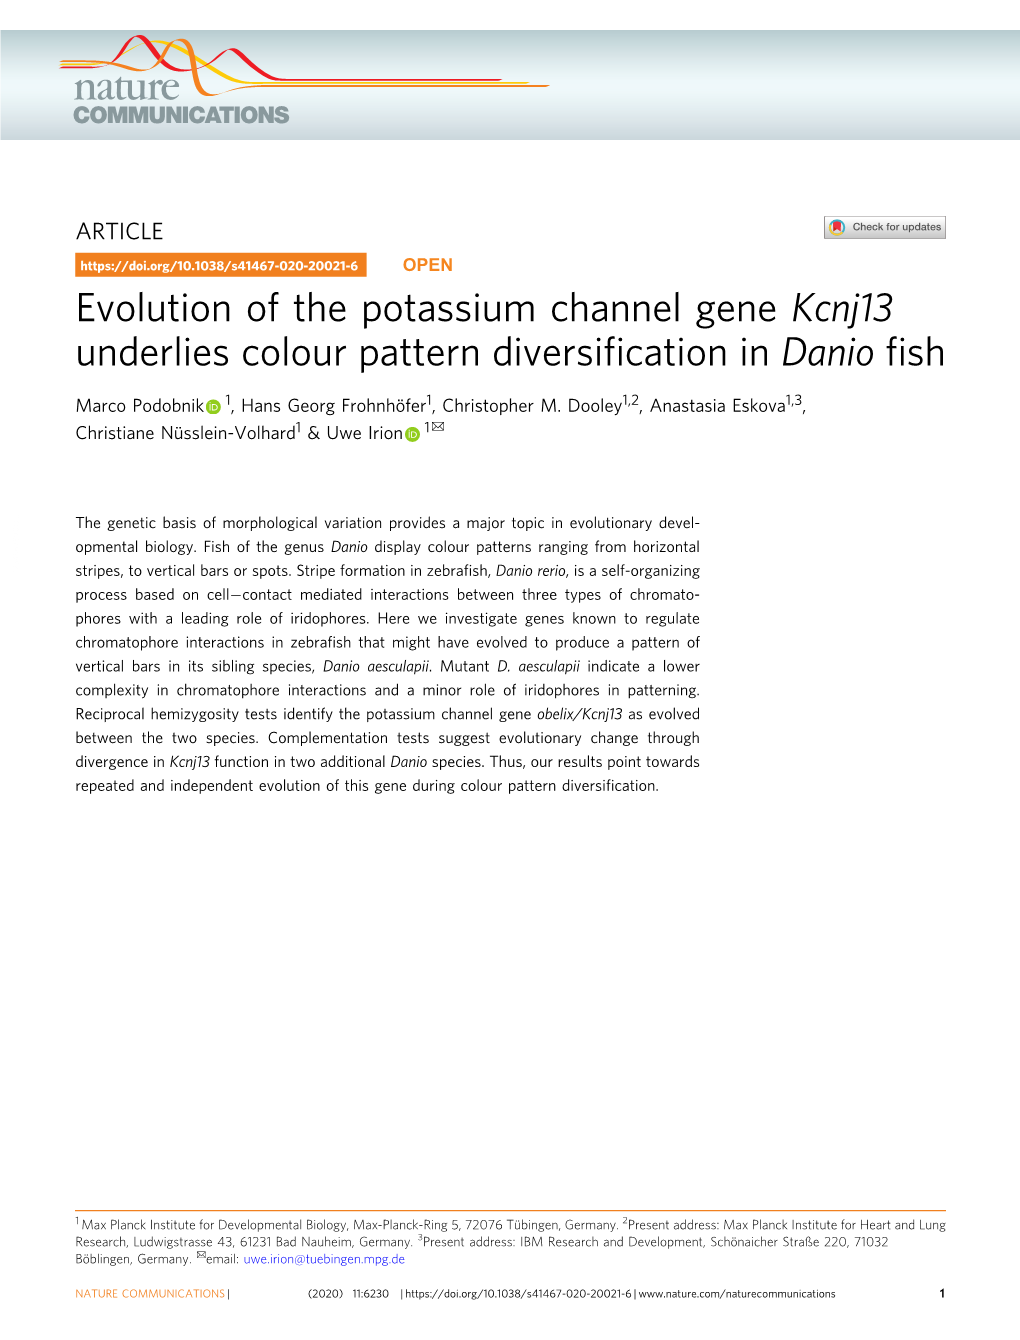 Evolution of the Potassium Channel Gene Kcnj13 Underlies Colour Pattern Diversification in Danio Fish